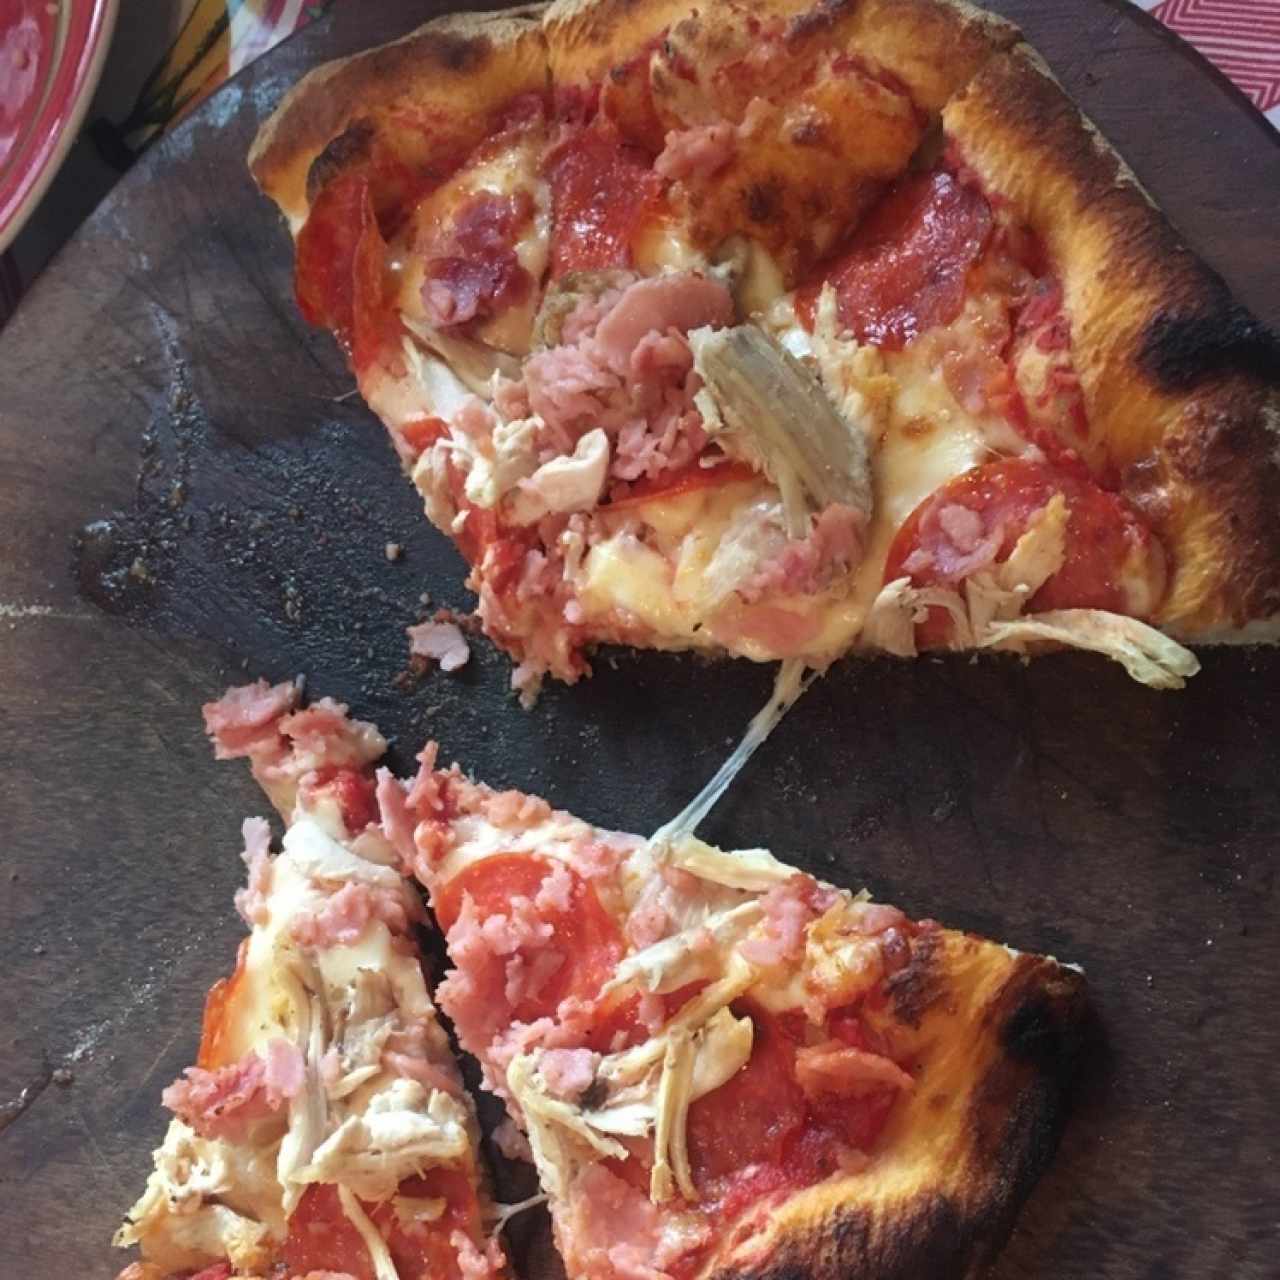 pizza Roma